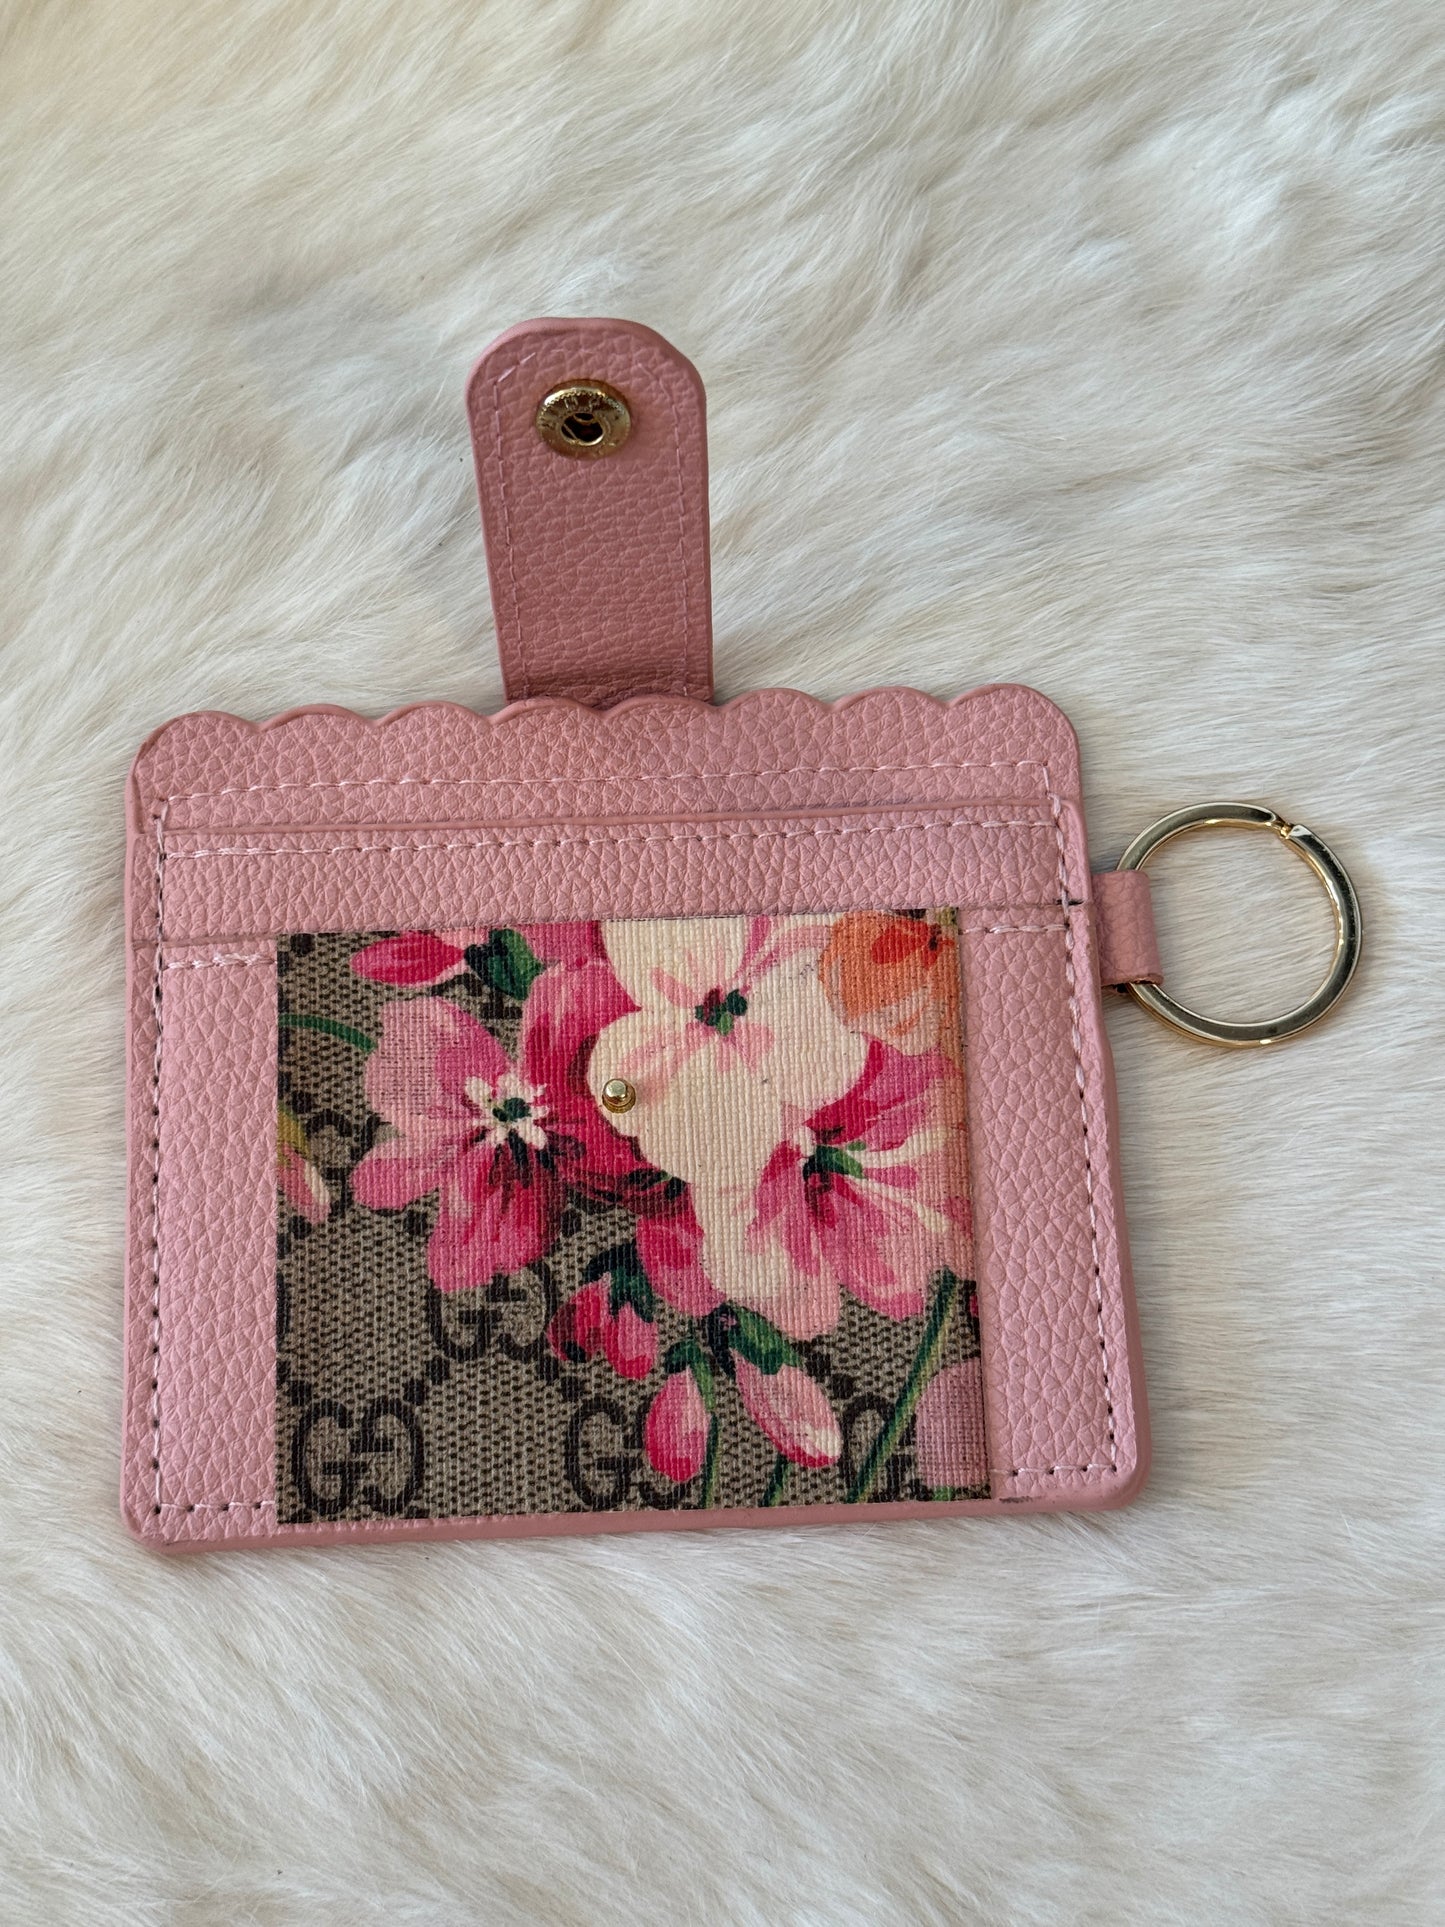 Blooms Cardholder Keychain Pink